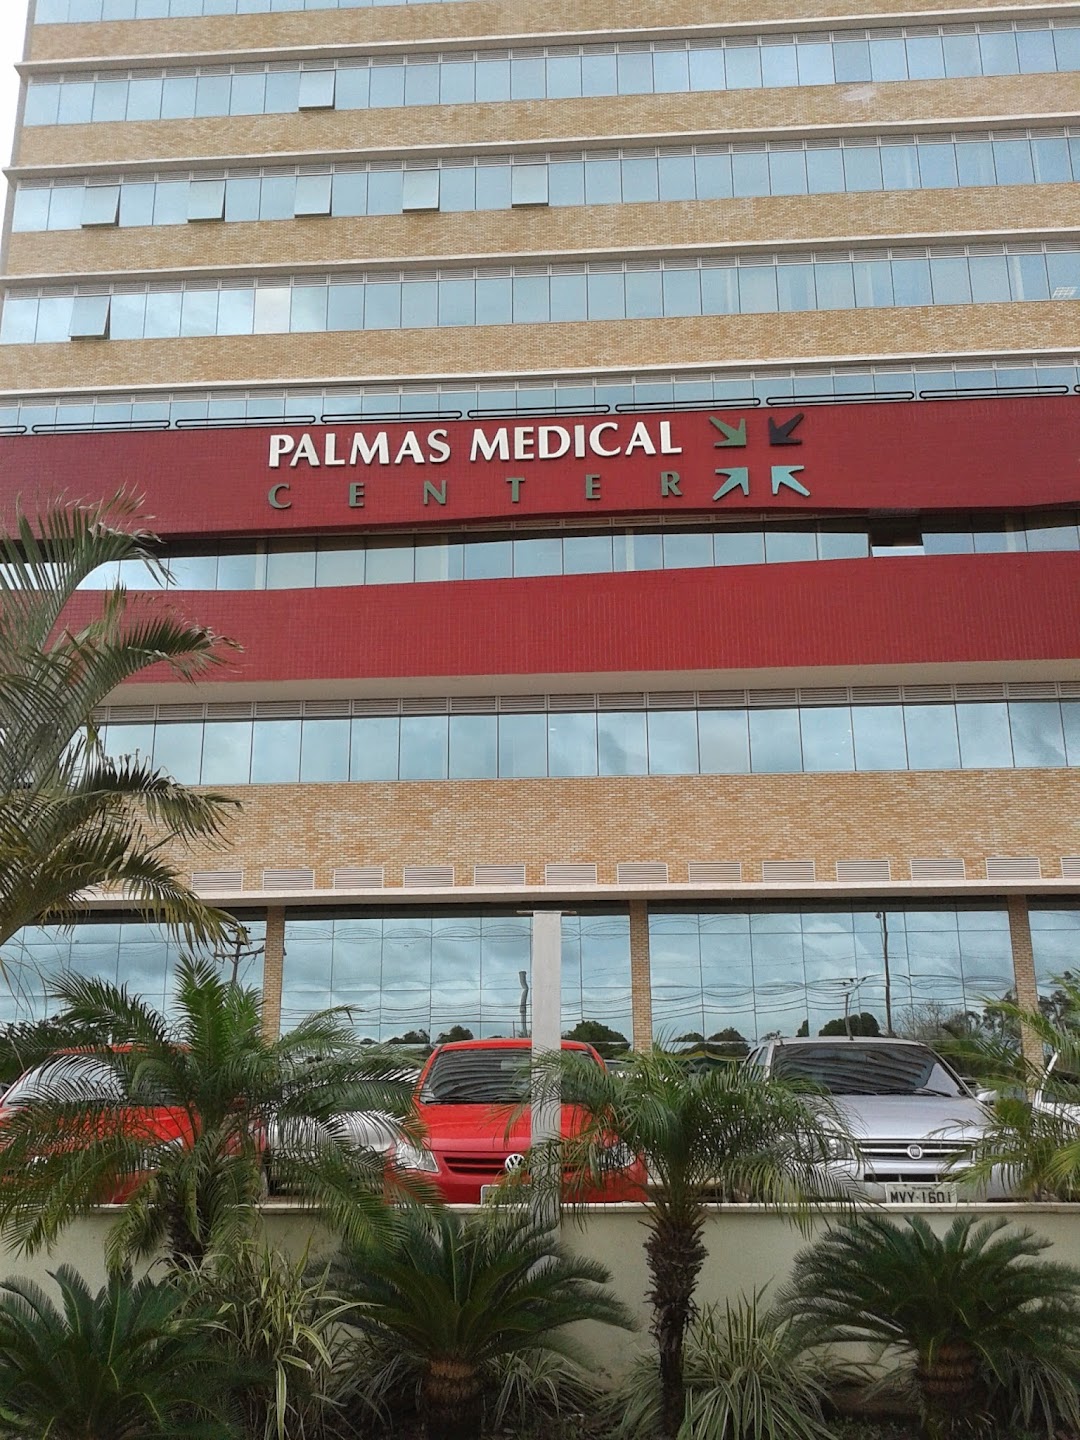 Palmas Medical Center